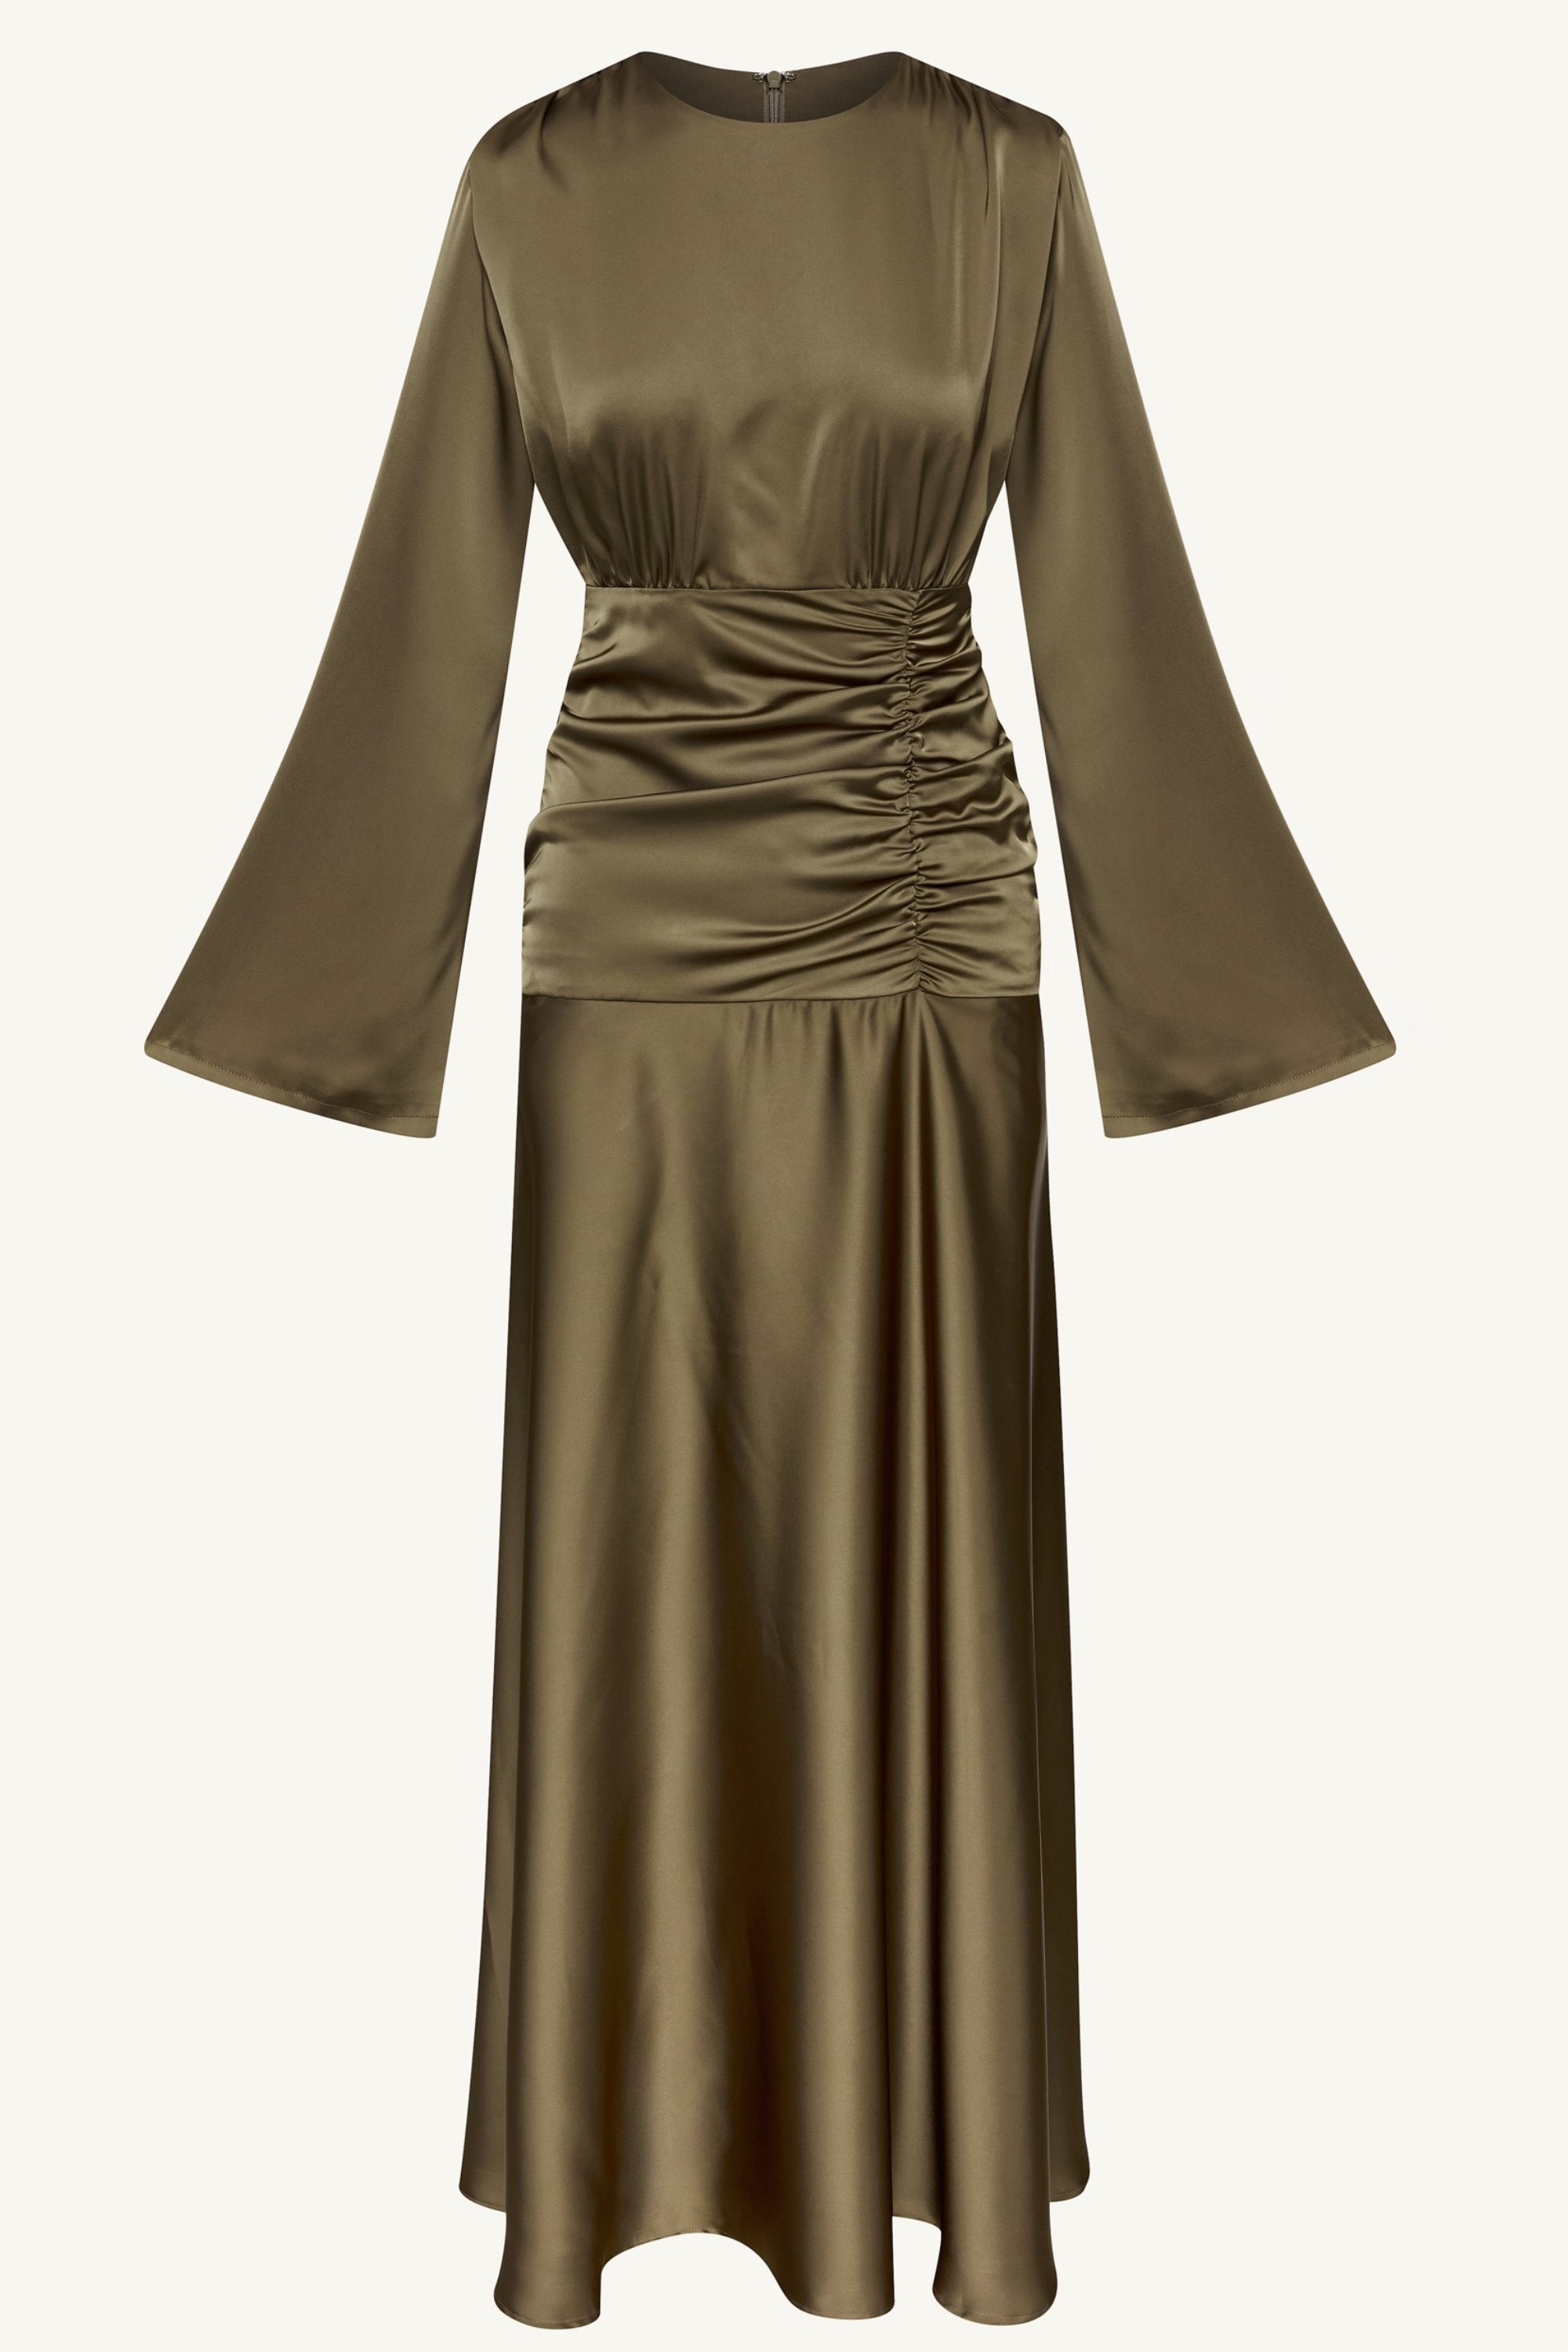 Shams Satin Side Rouched Maxi Dress - Olive Clothing epschoolboard 